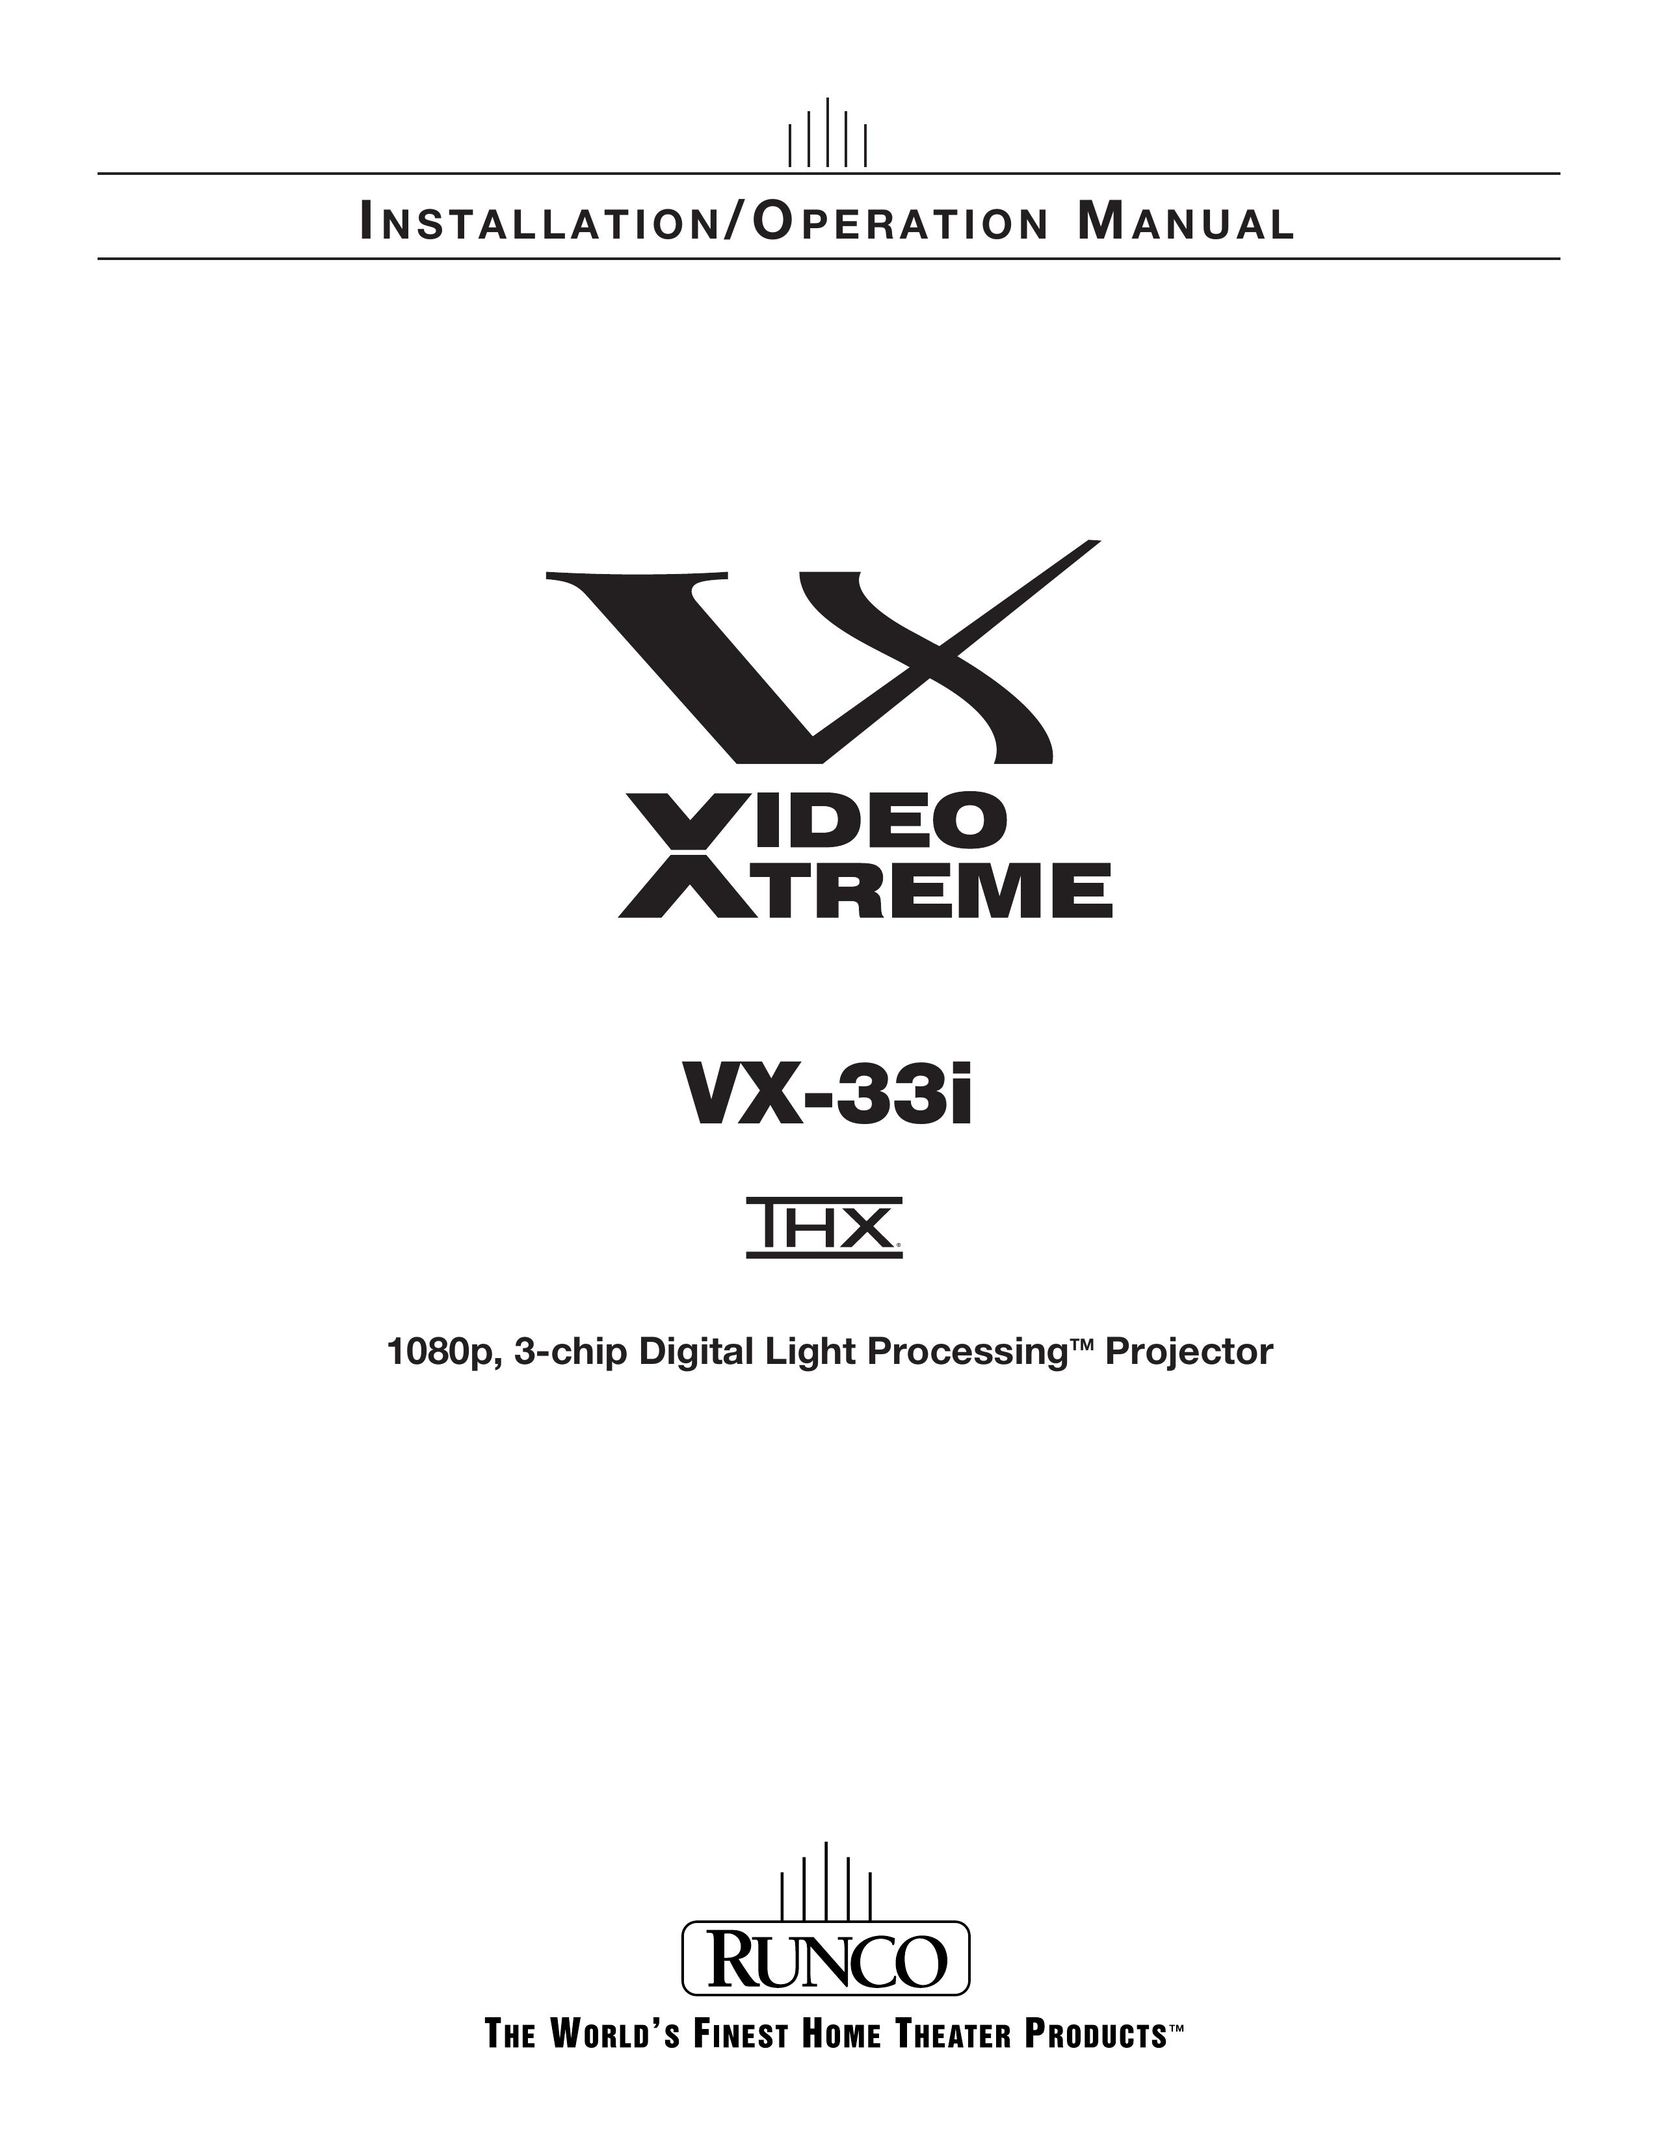 Runco VX-33I Projection Television User Manual